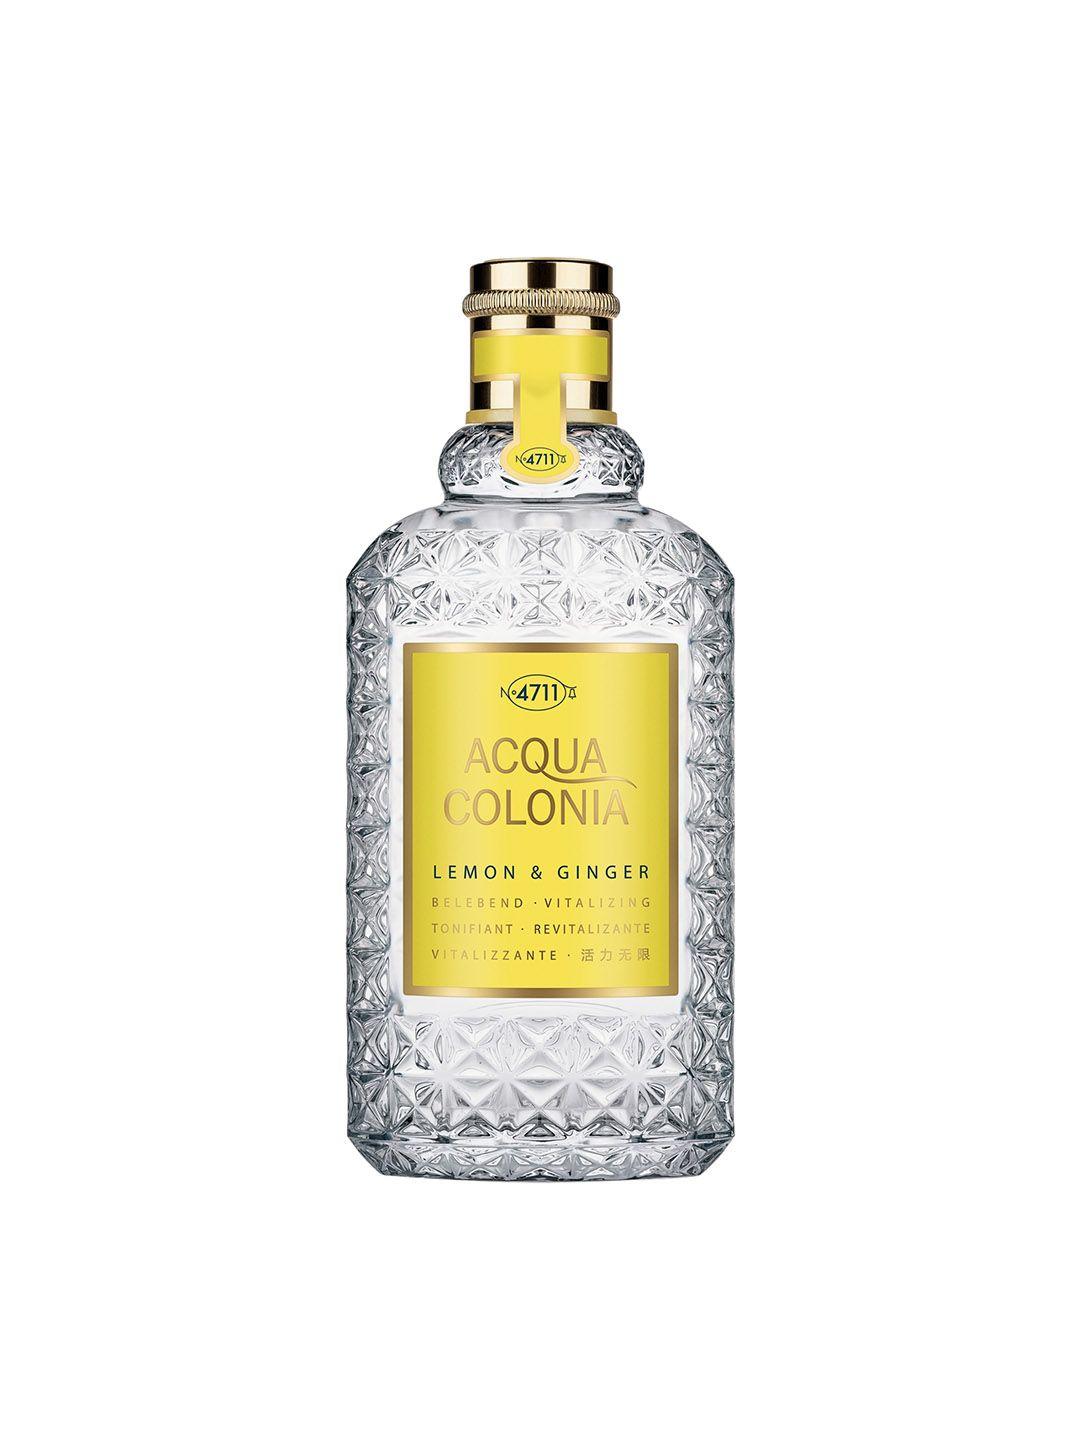 4711 acqua colonia lemon & ginger eau de cologne - 170 ml